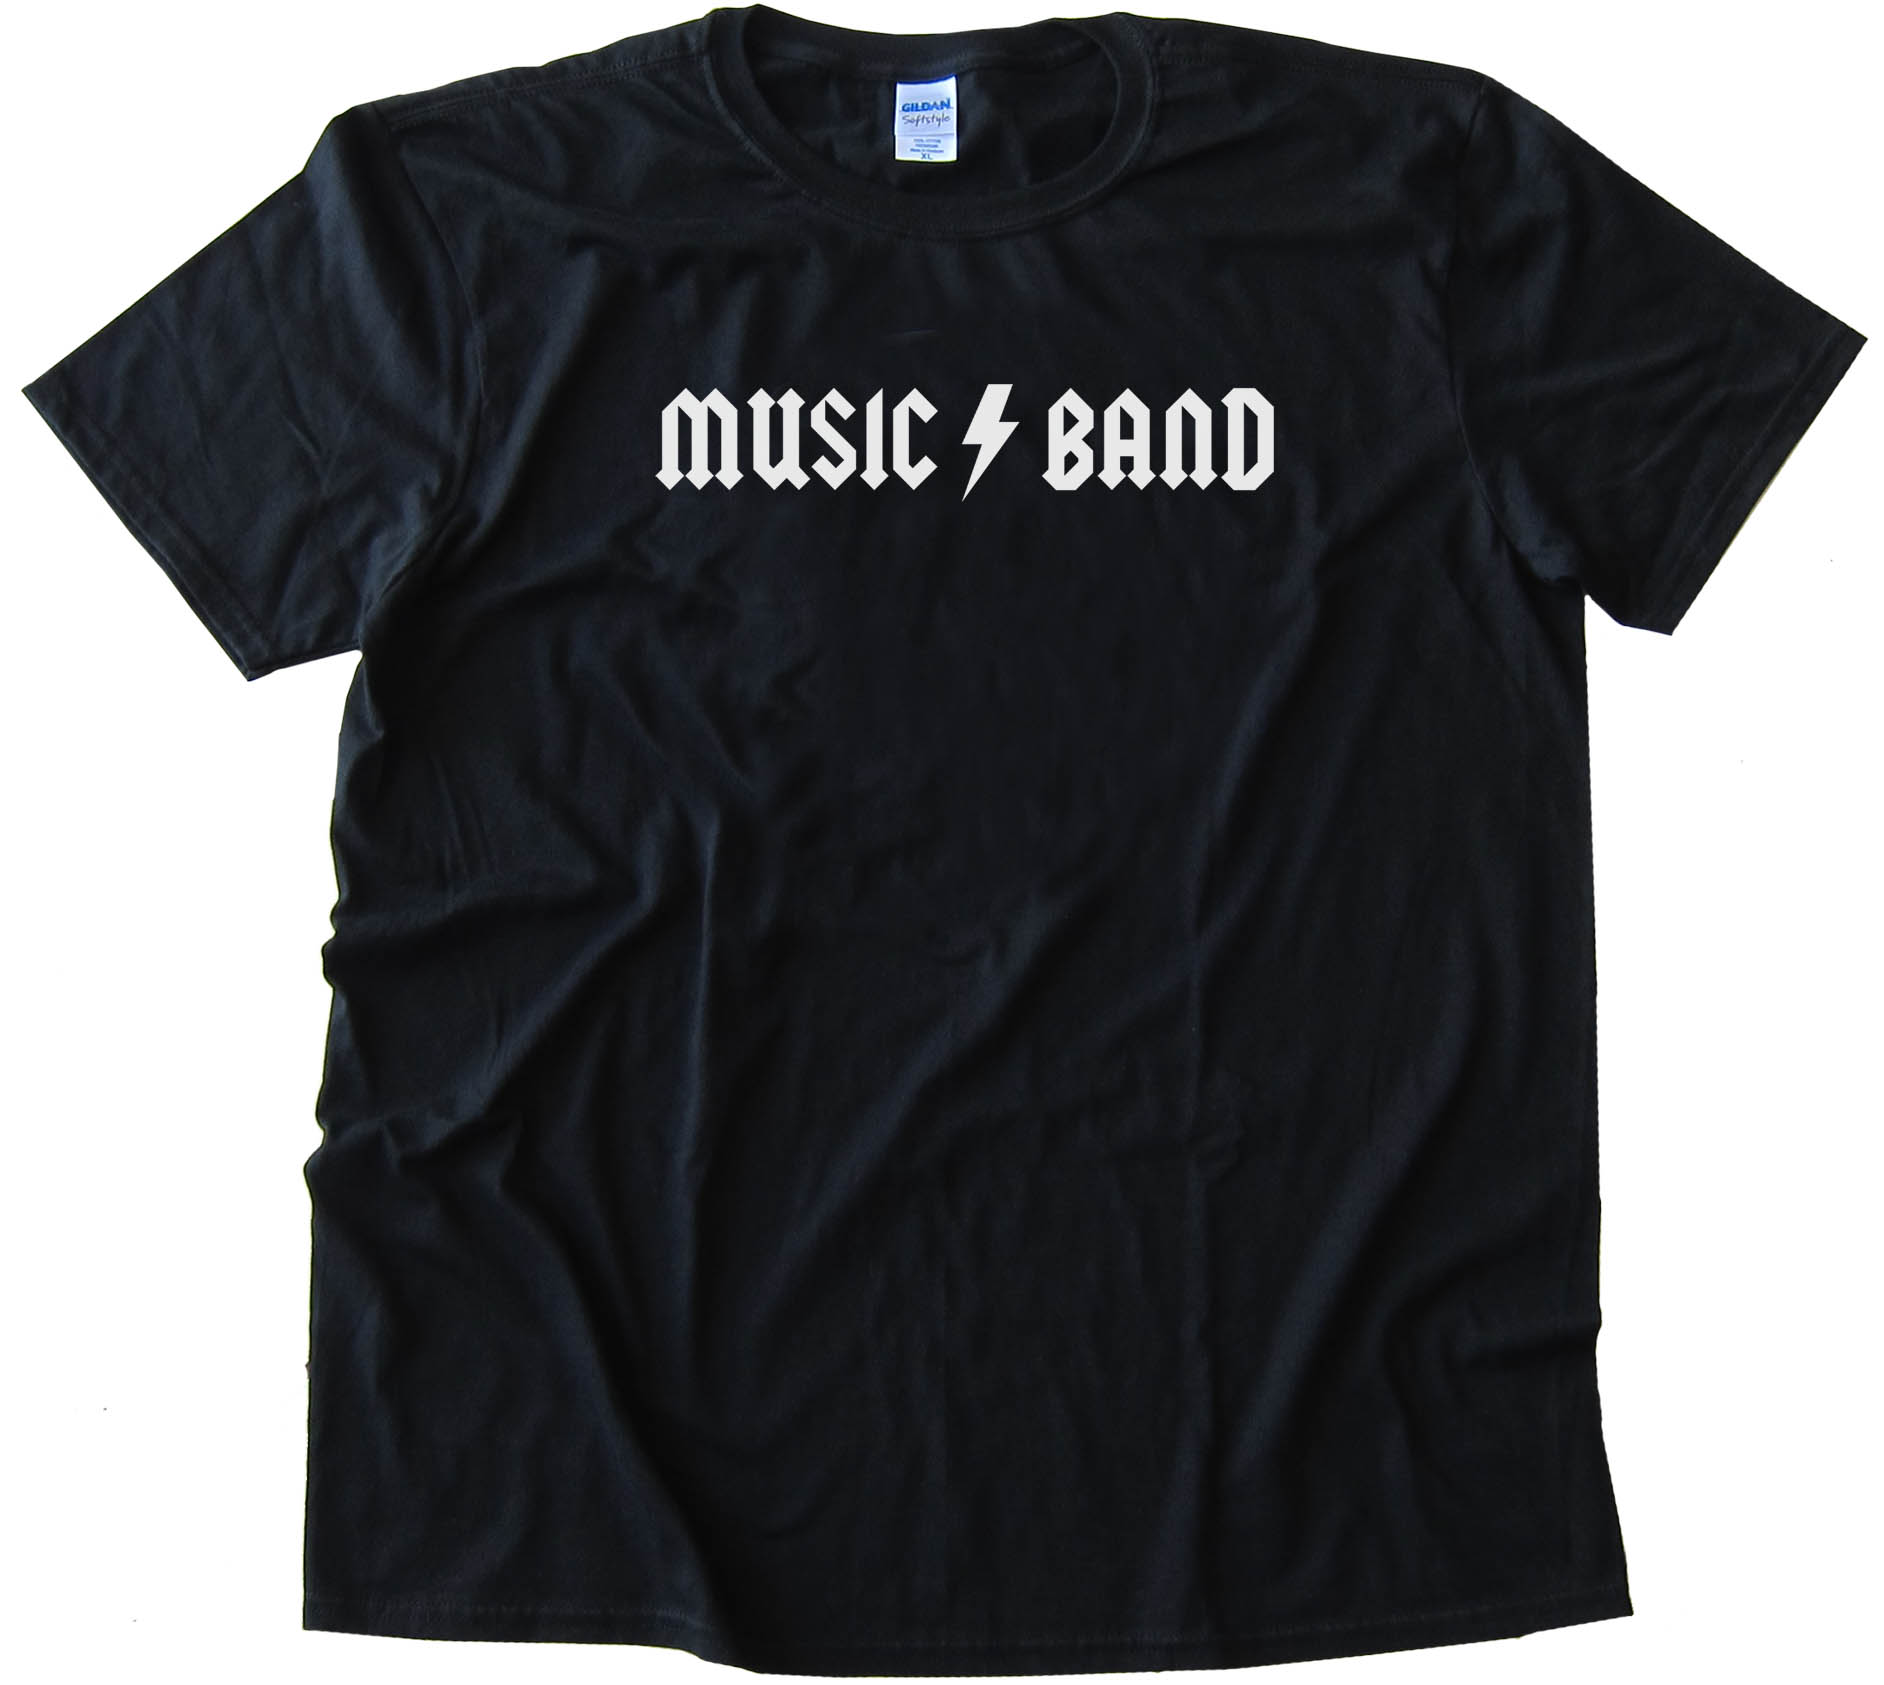 Music Band Airheads Tee Shirt